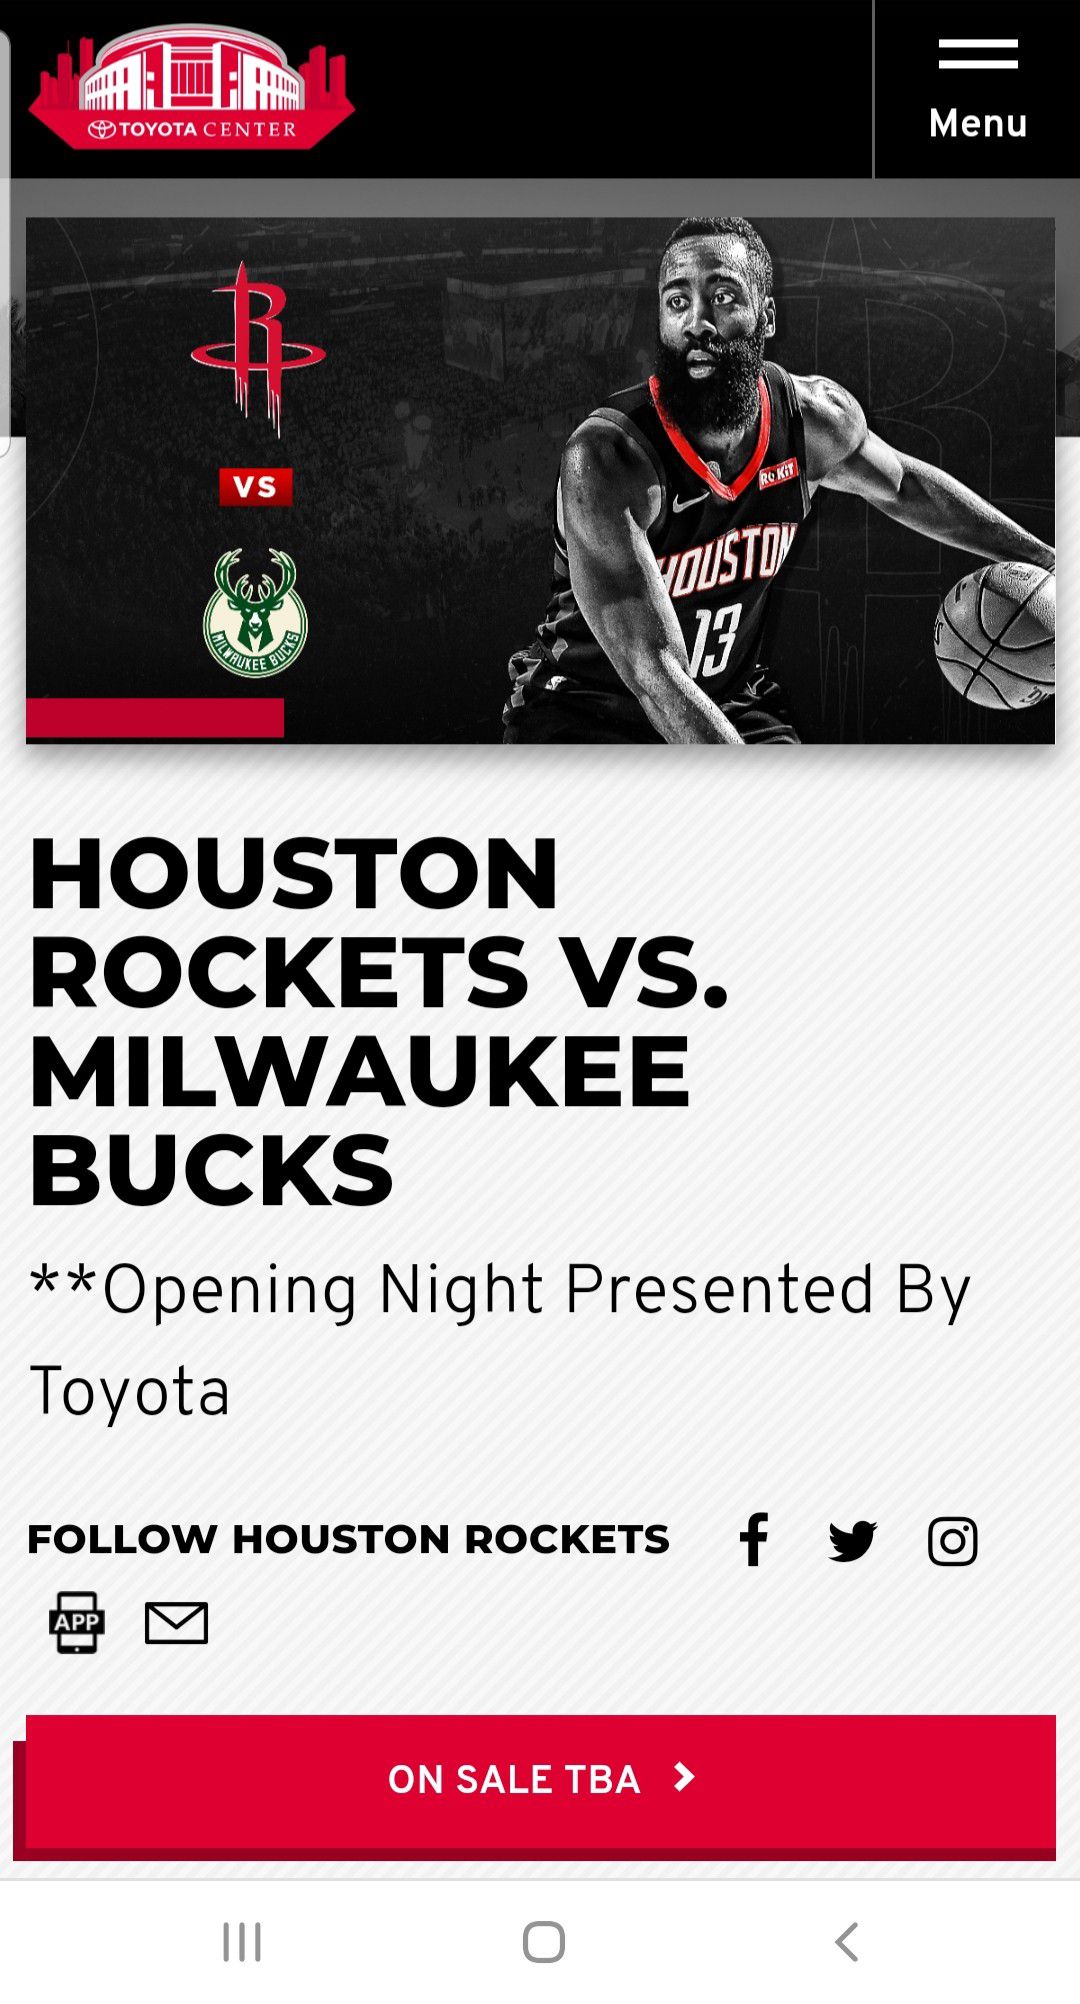 Rockets vs. Milwaukee Buck Oct. 24th.